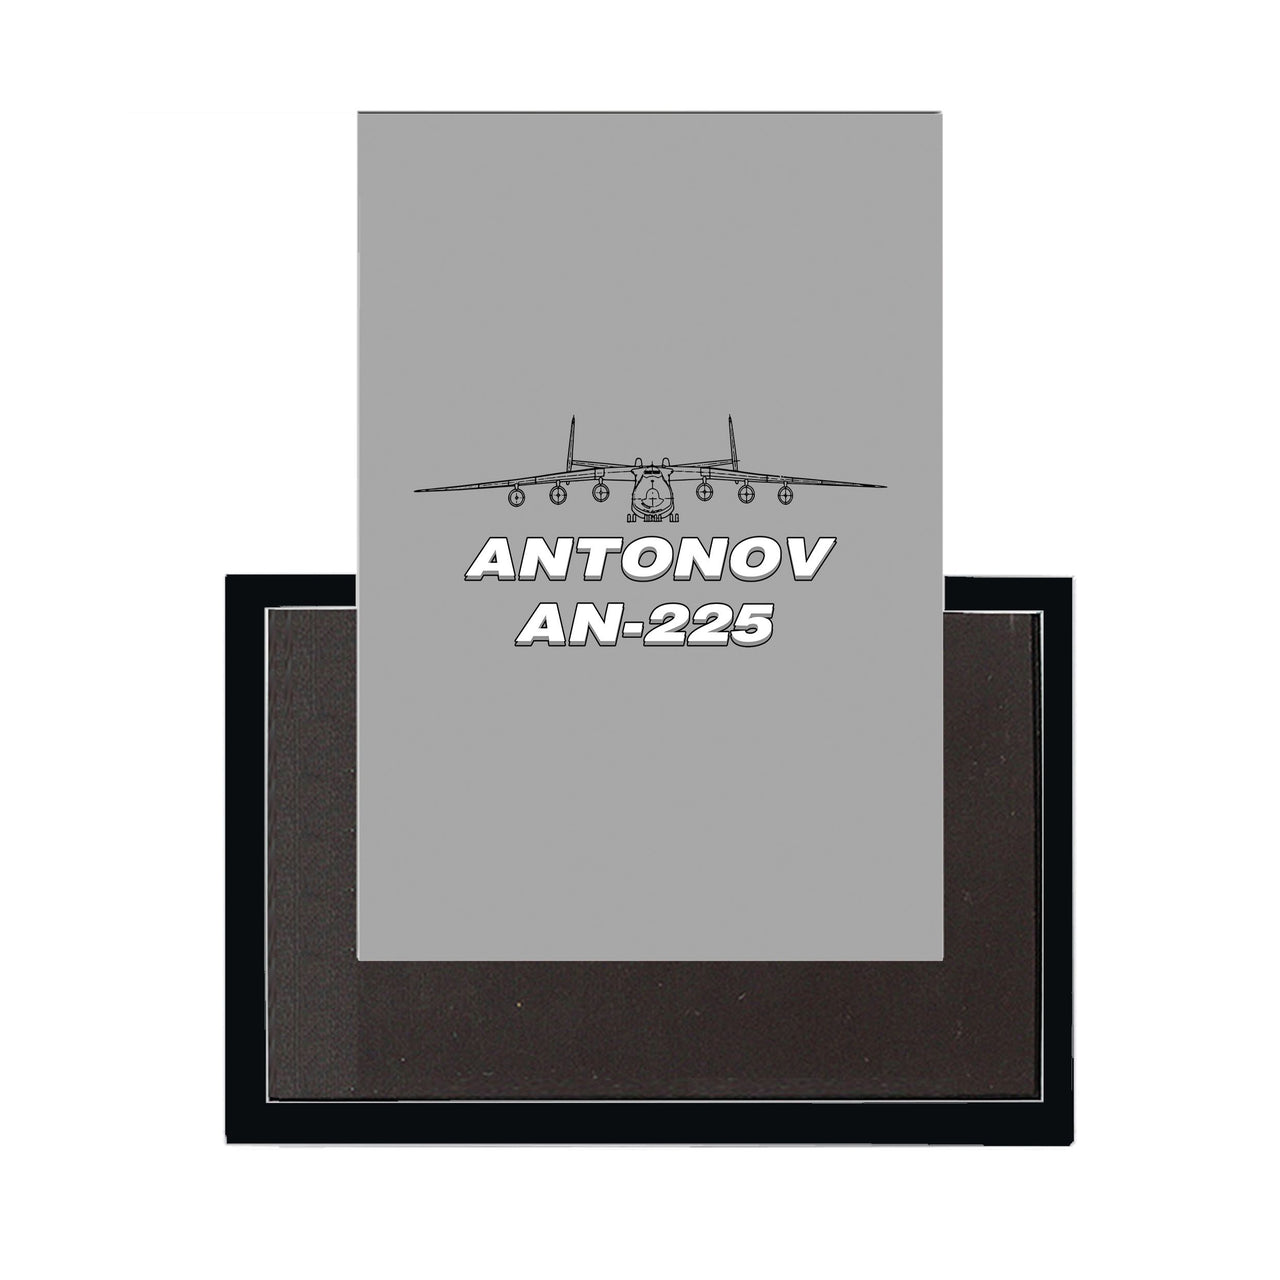 Antonov AN-225 (26) Designed Magnets